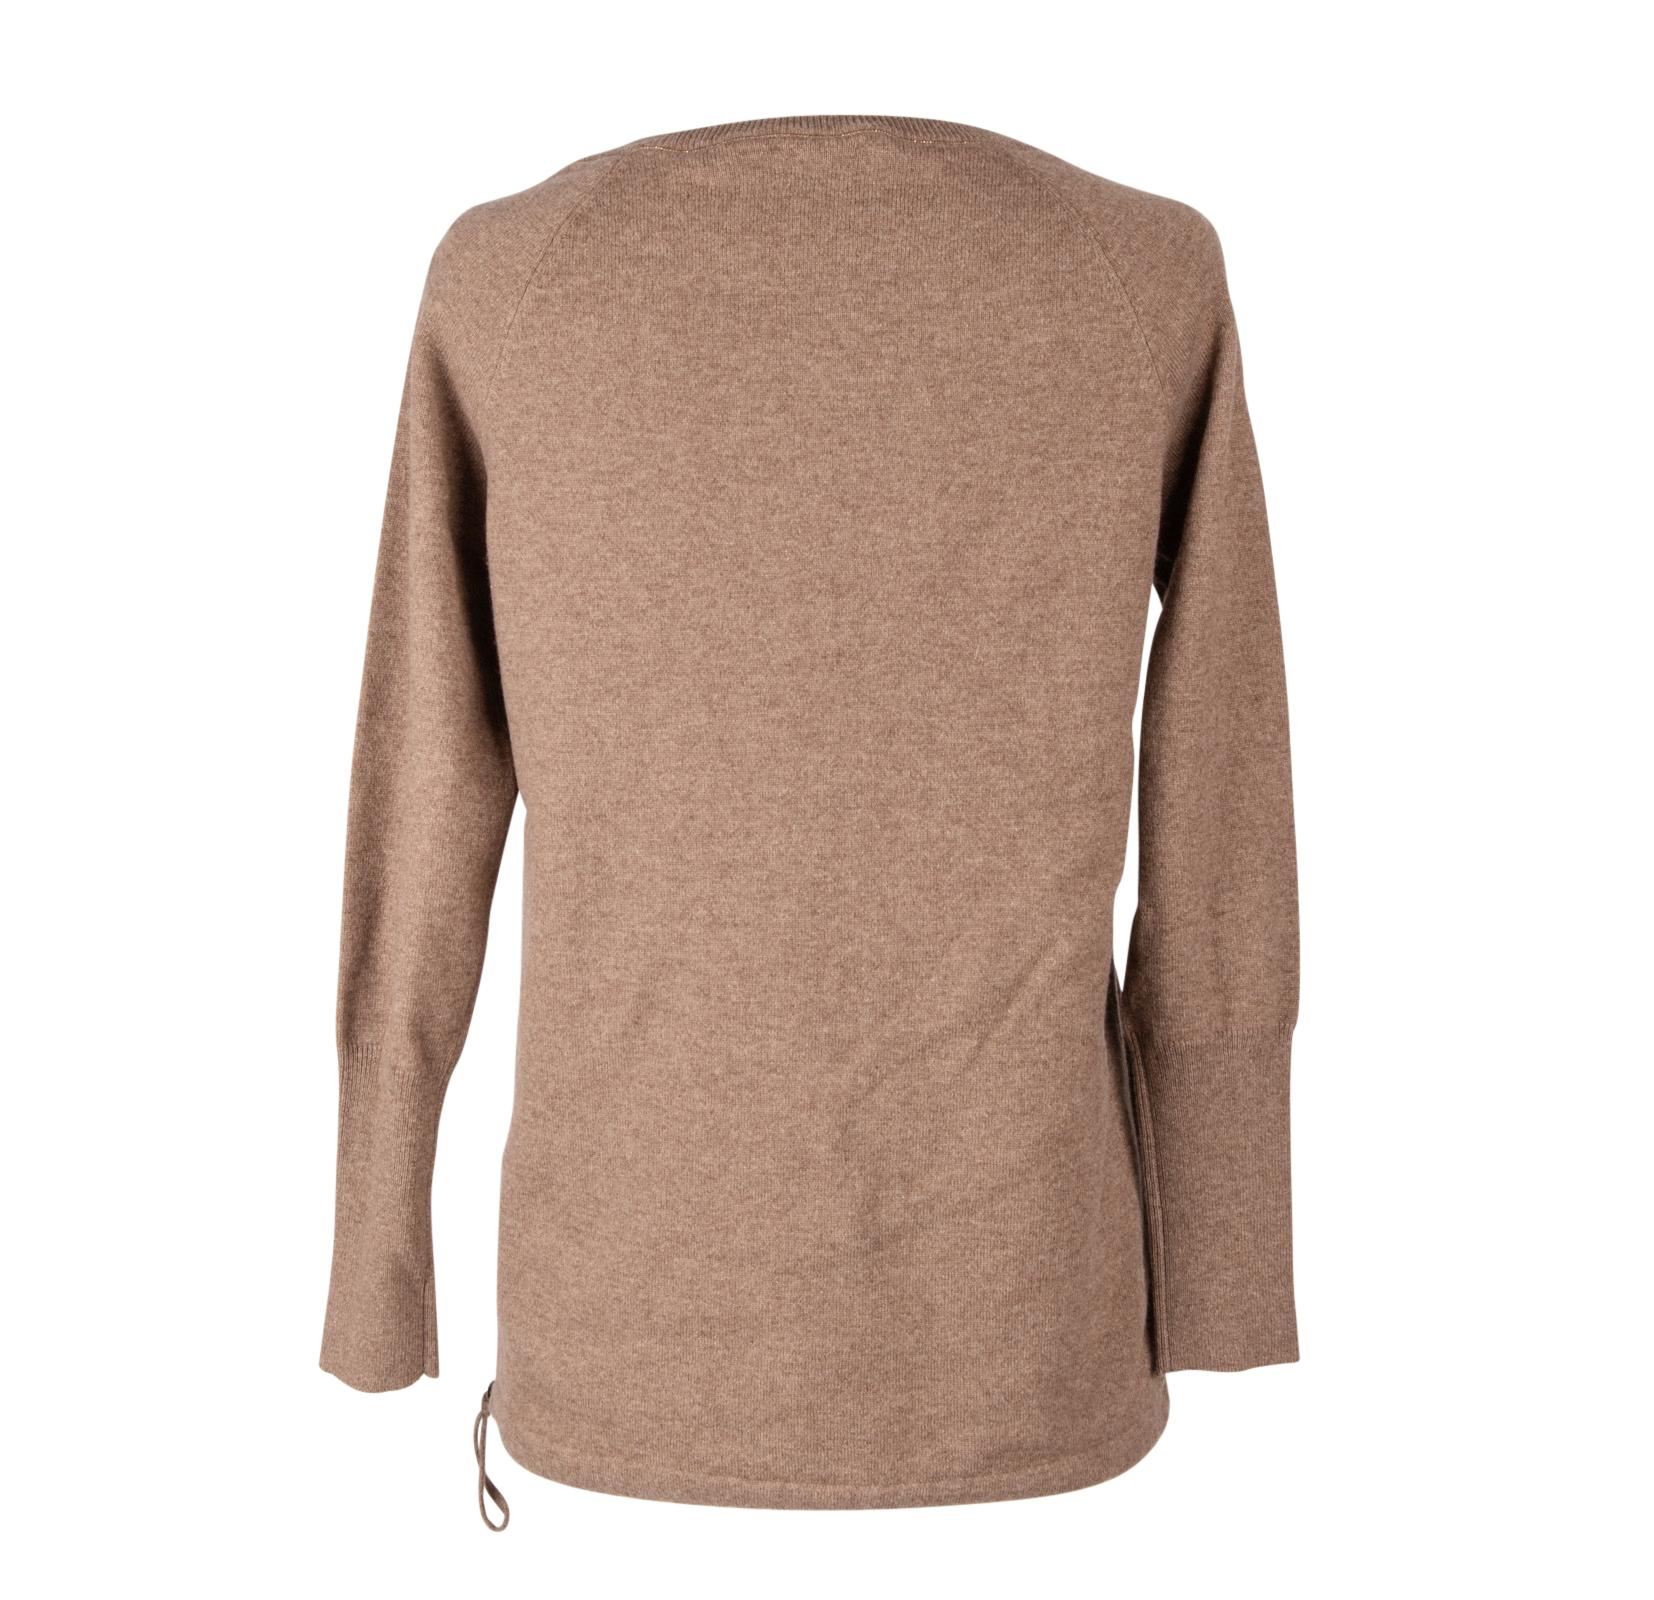 Brunello Cucinelli Sweater Cashmere Pullover Subtle Signature Bead Neck Detail M In Excellent Condition For Sale In Miami, FL